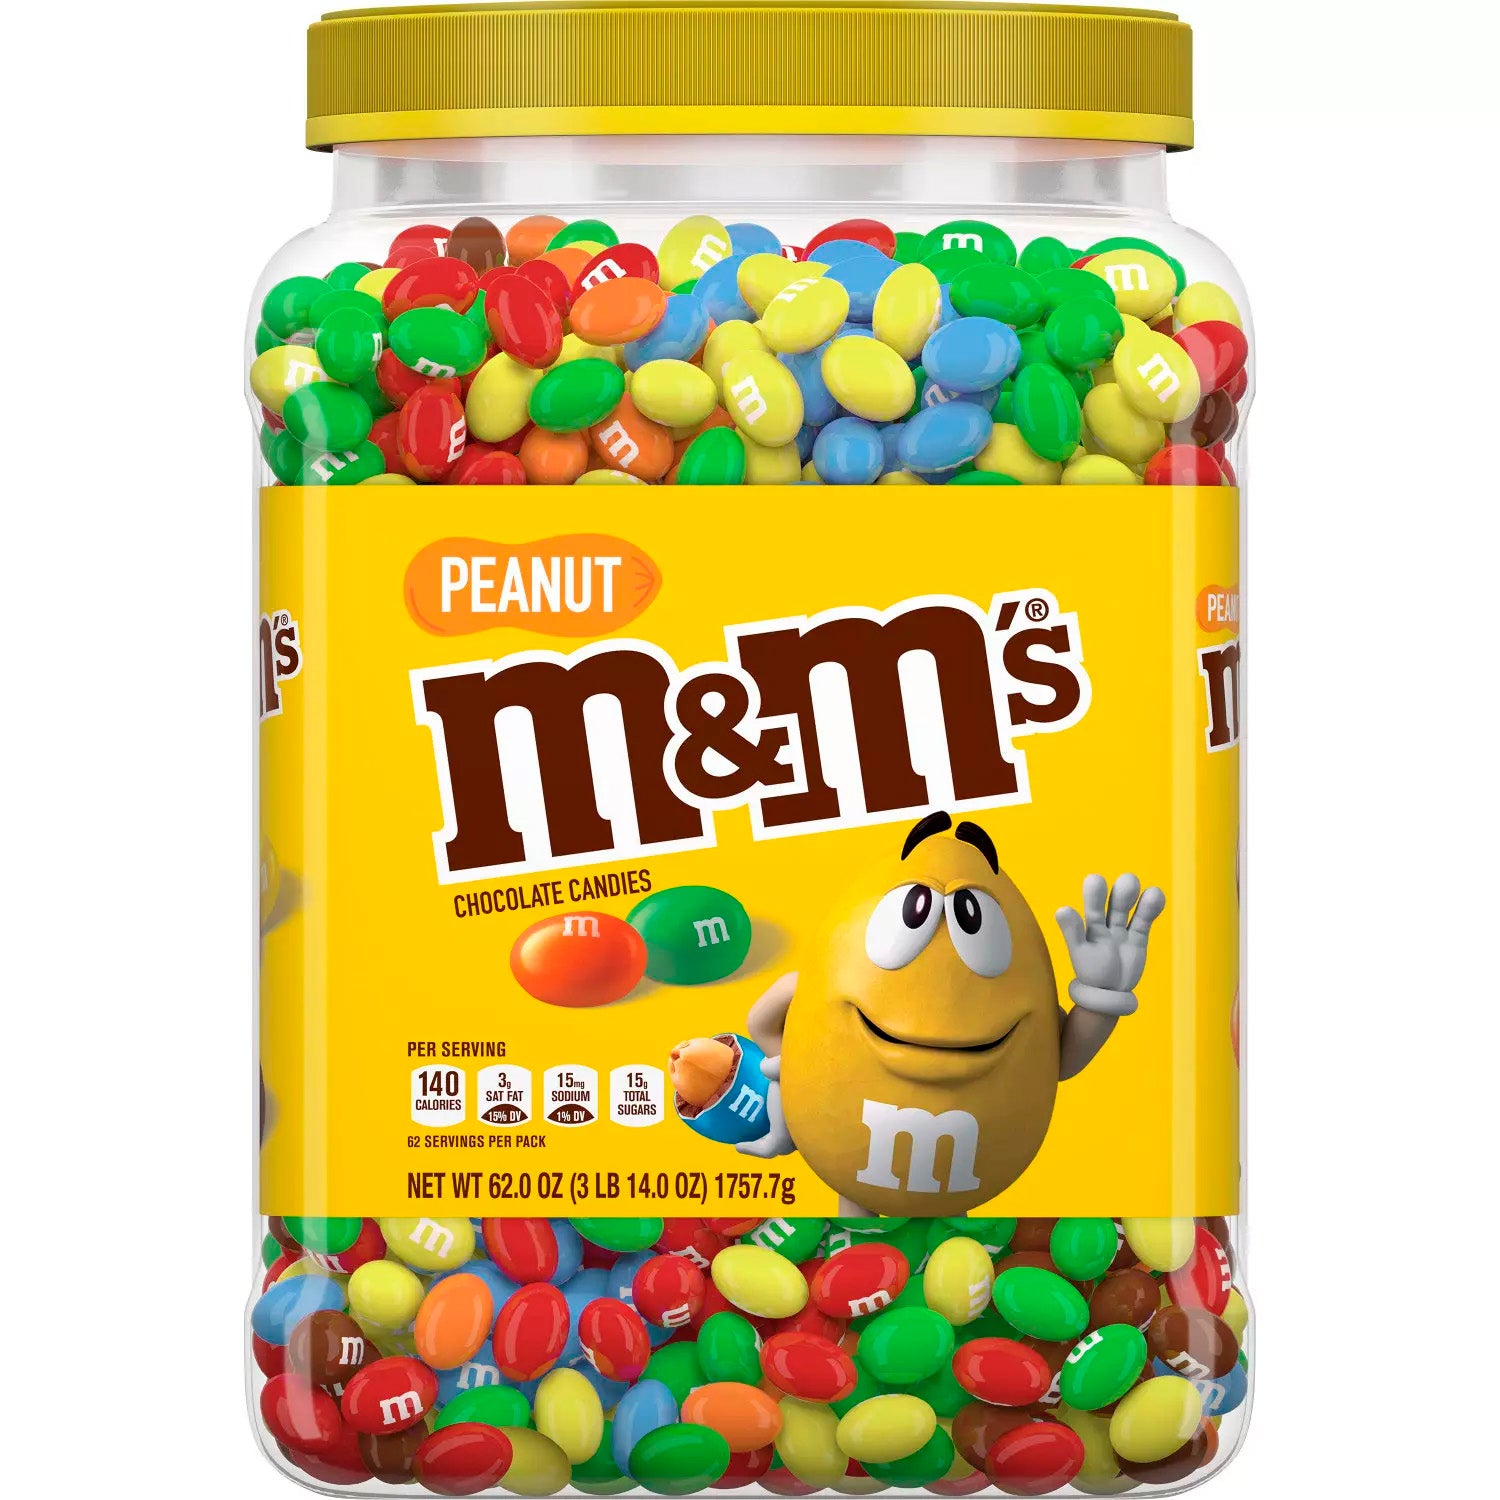 M&M's Peanut Chocolate Candy Box - 1.74 oz - 48 ct